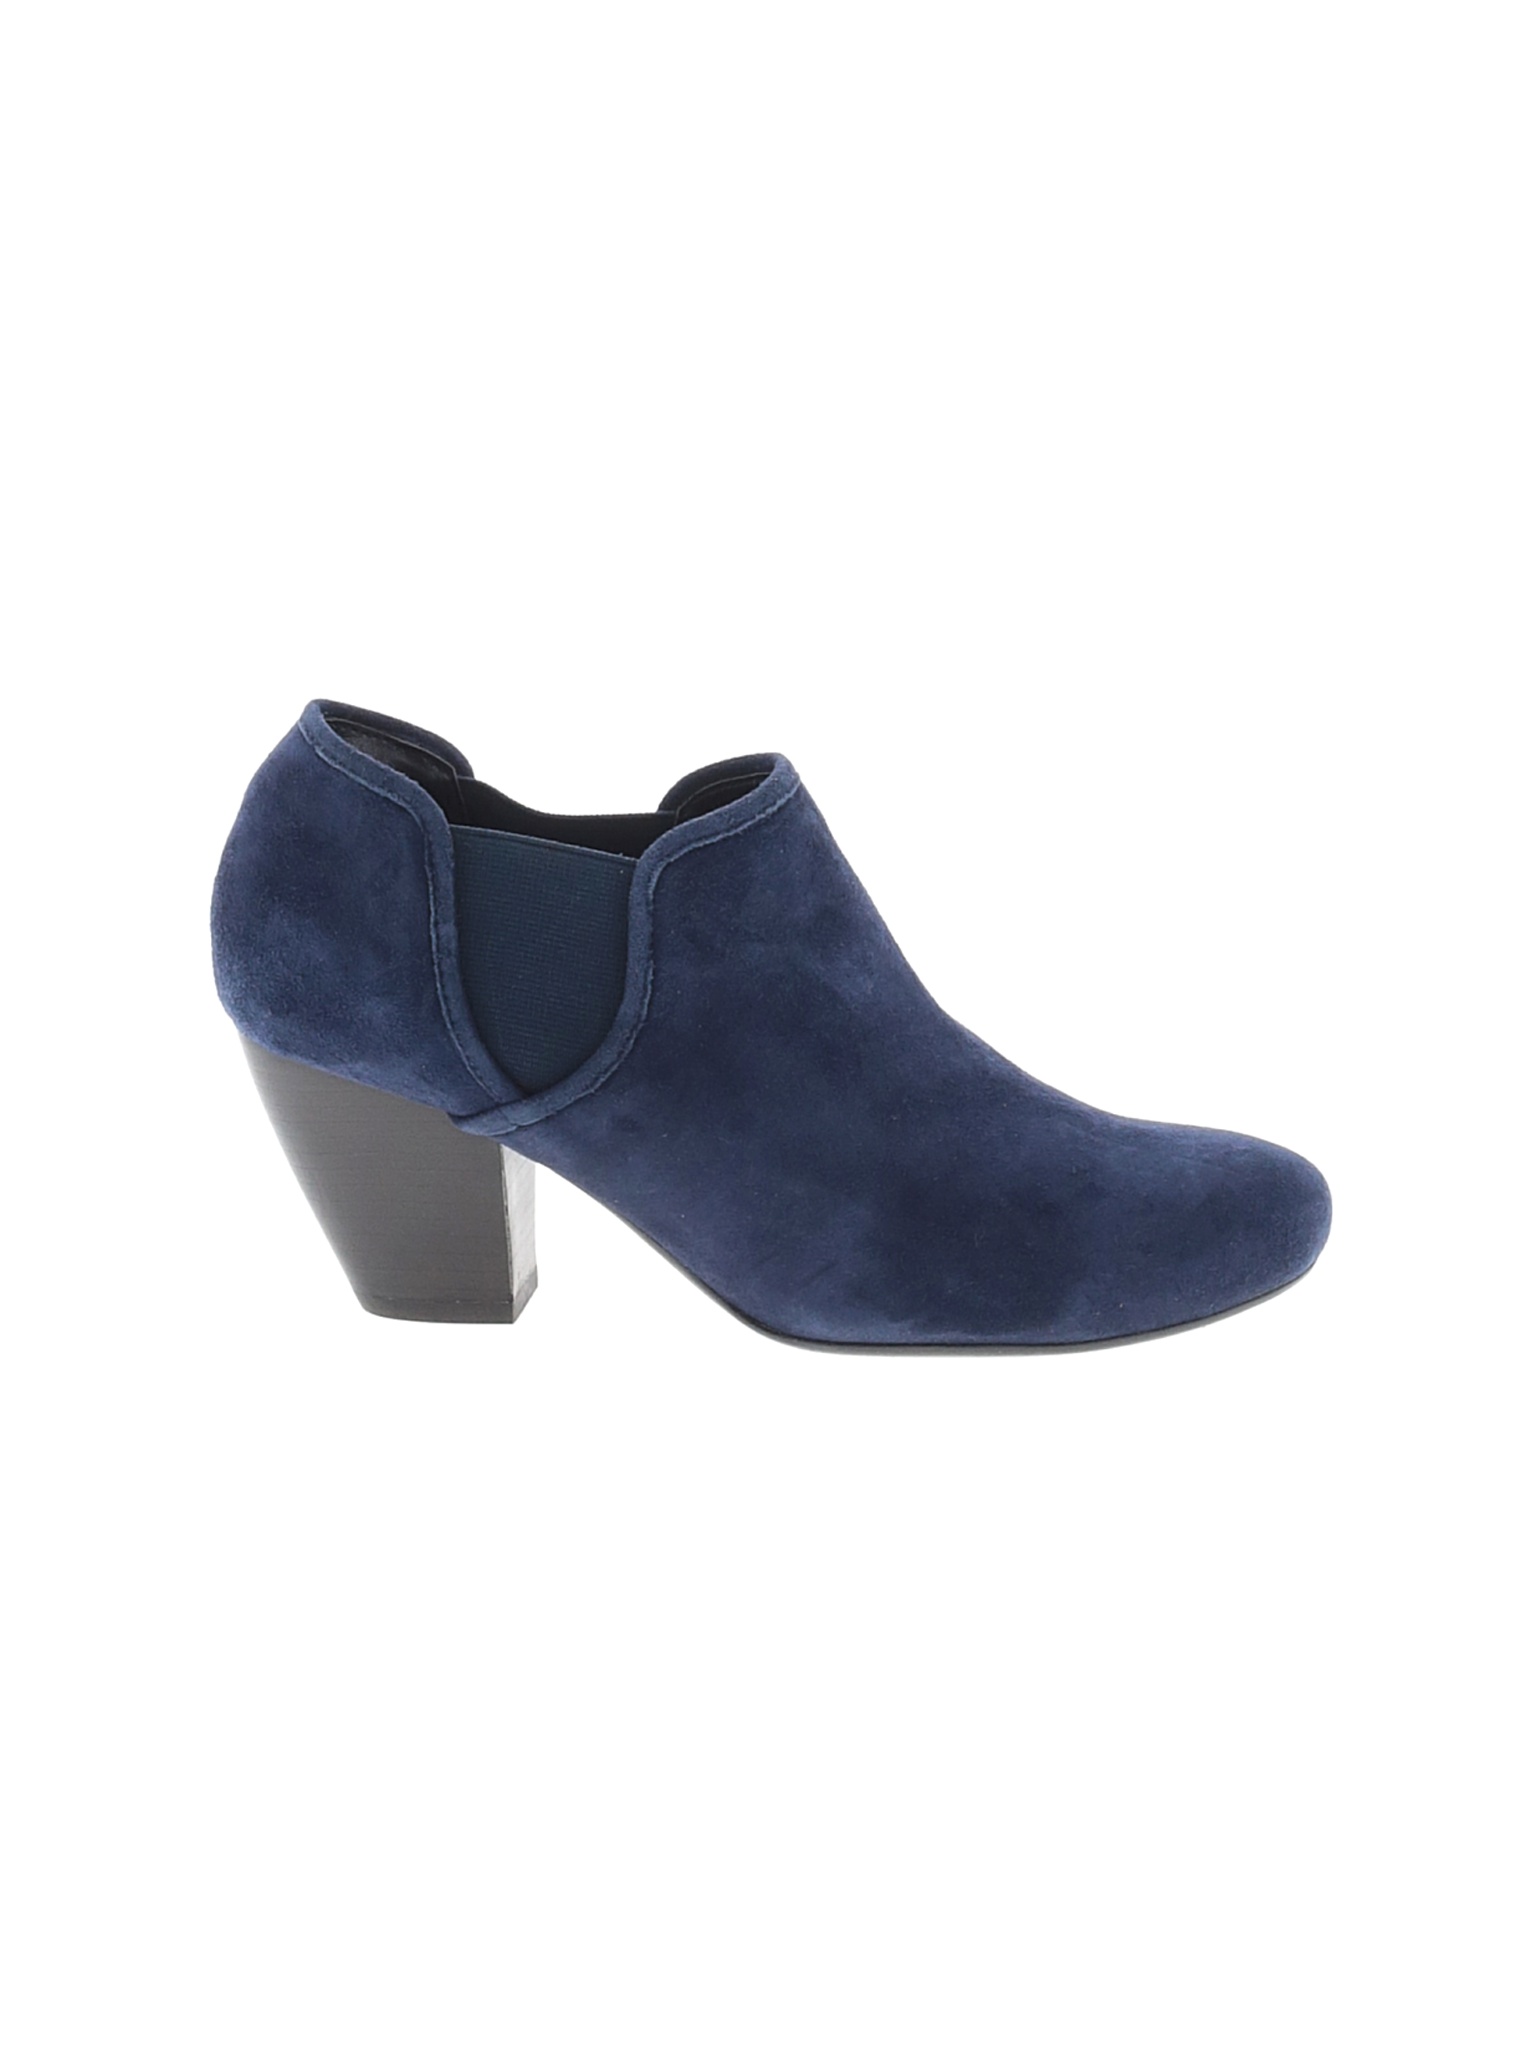 VANELi Women Blue Ankle Boots US 7.5 | eBay